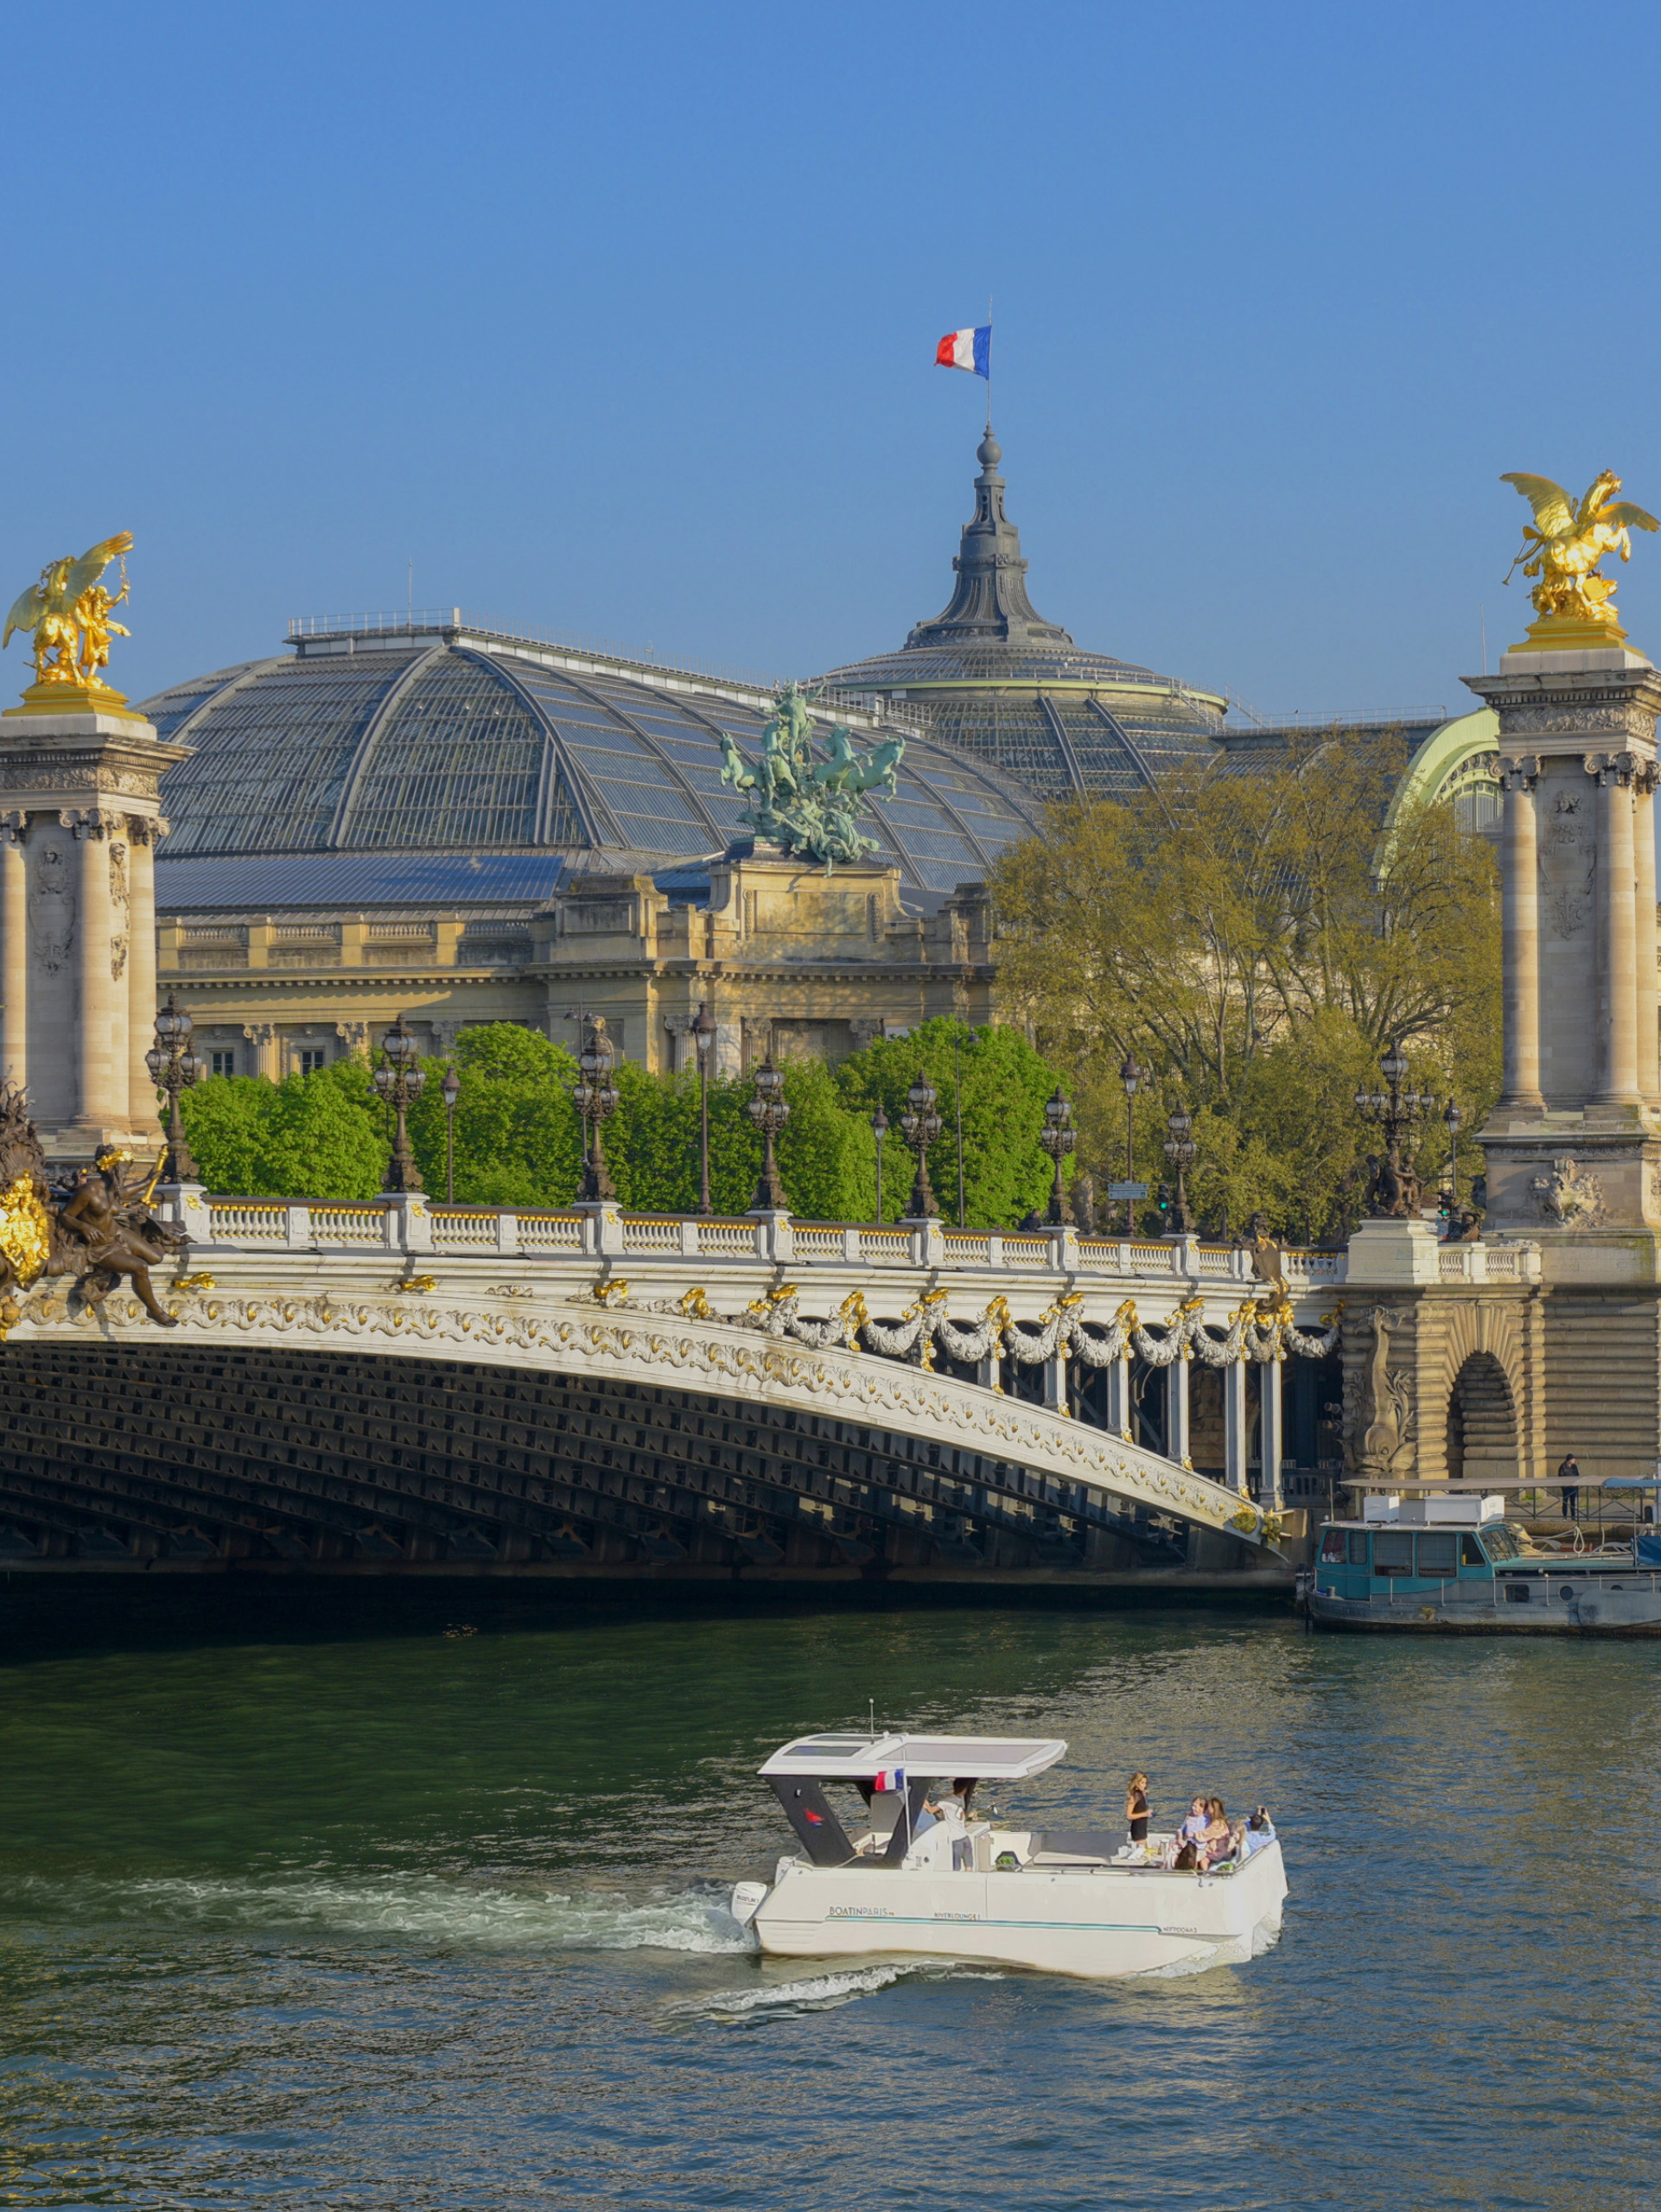 Boat in Paris - Private boat tour in Paris on the Seine - Pont Alexandre III - Portrait